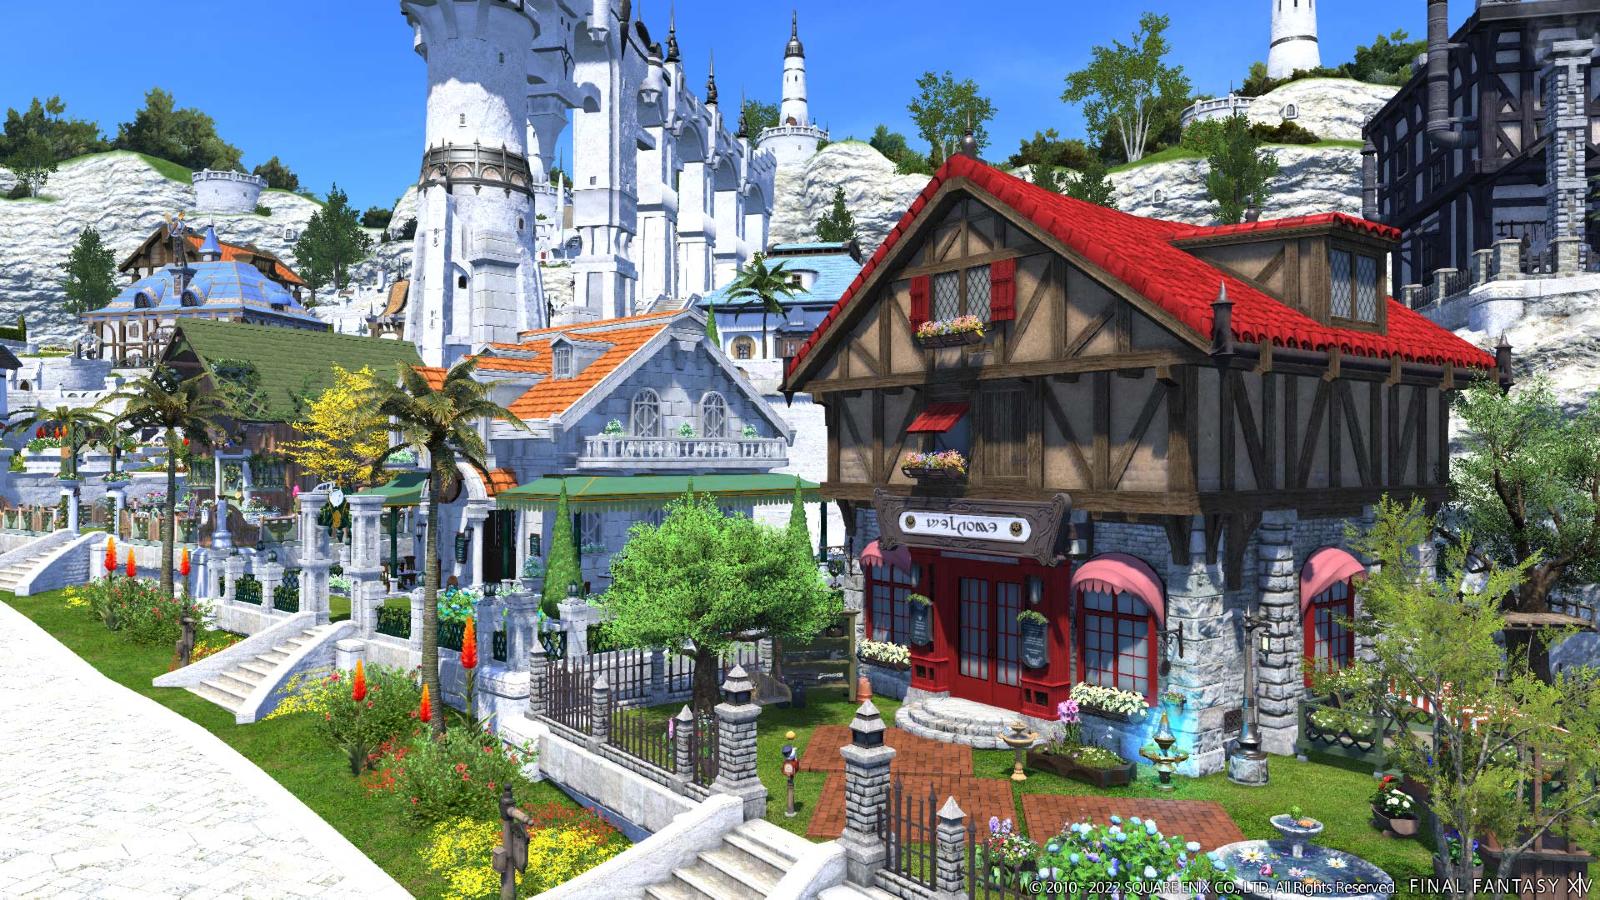 final fantasy xiv image of player housing